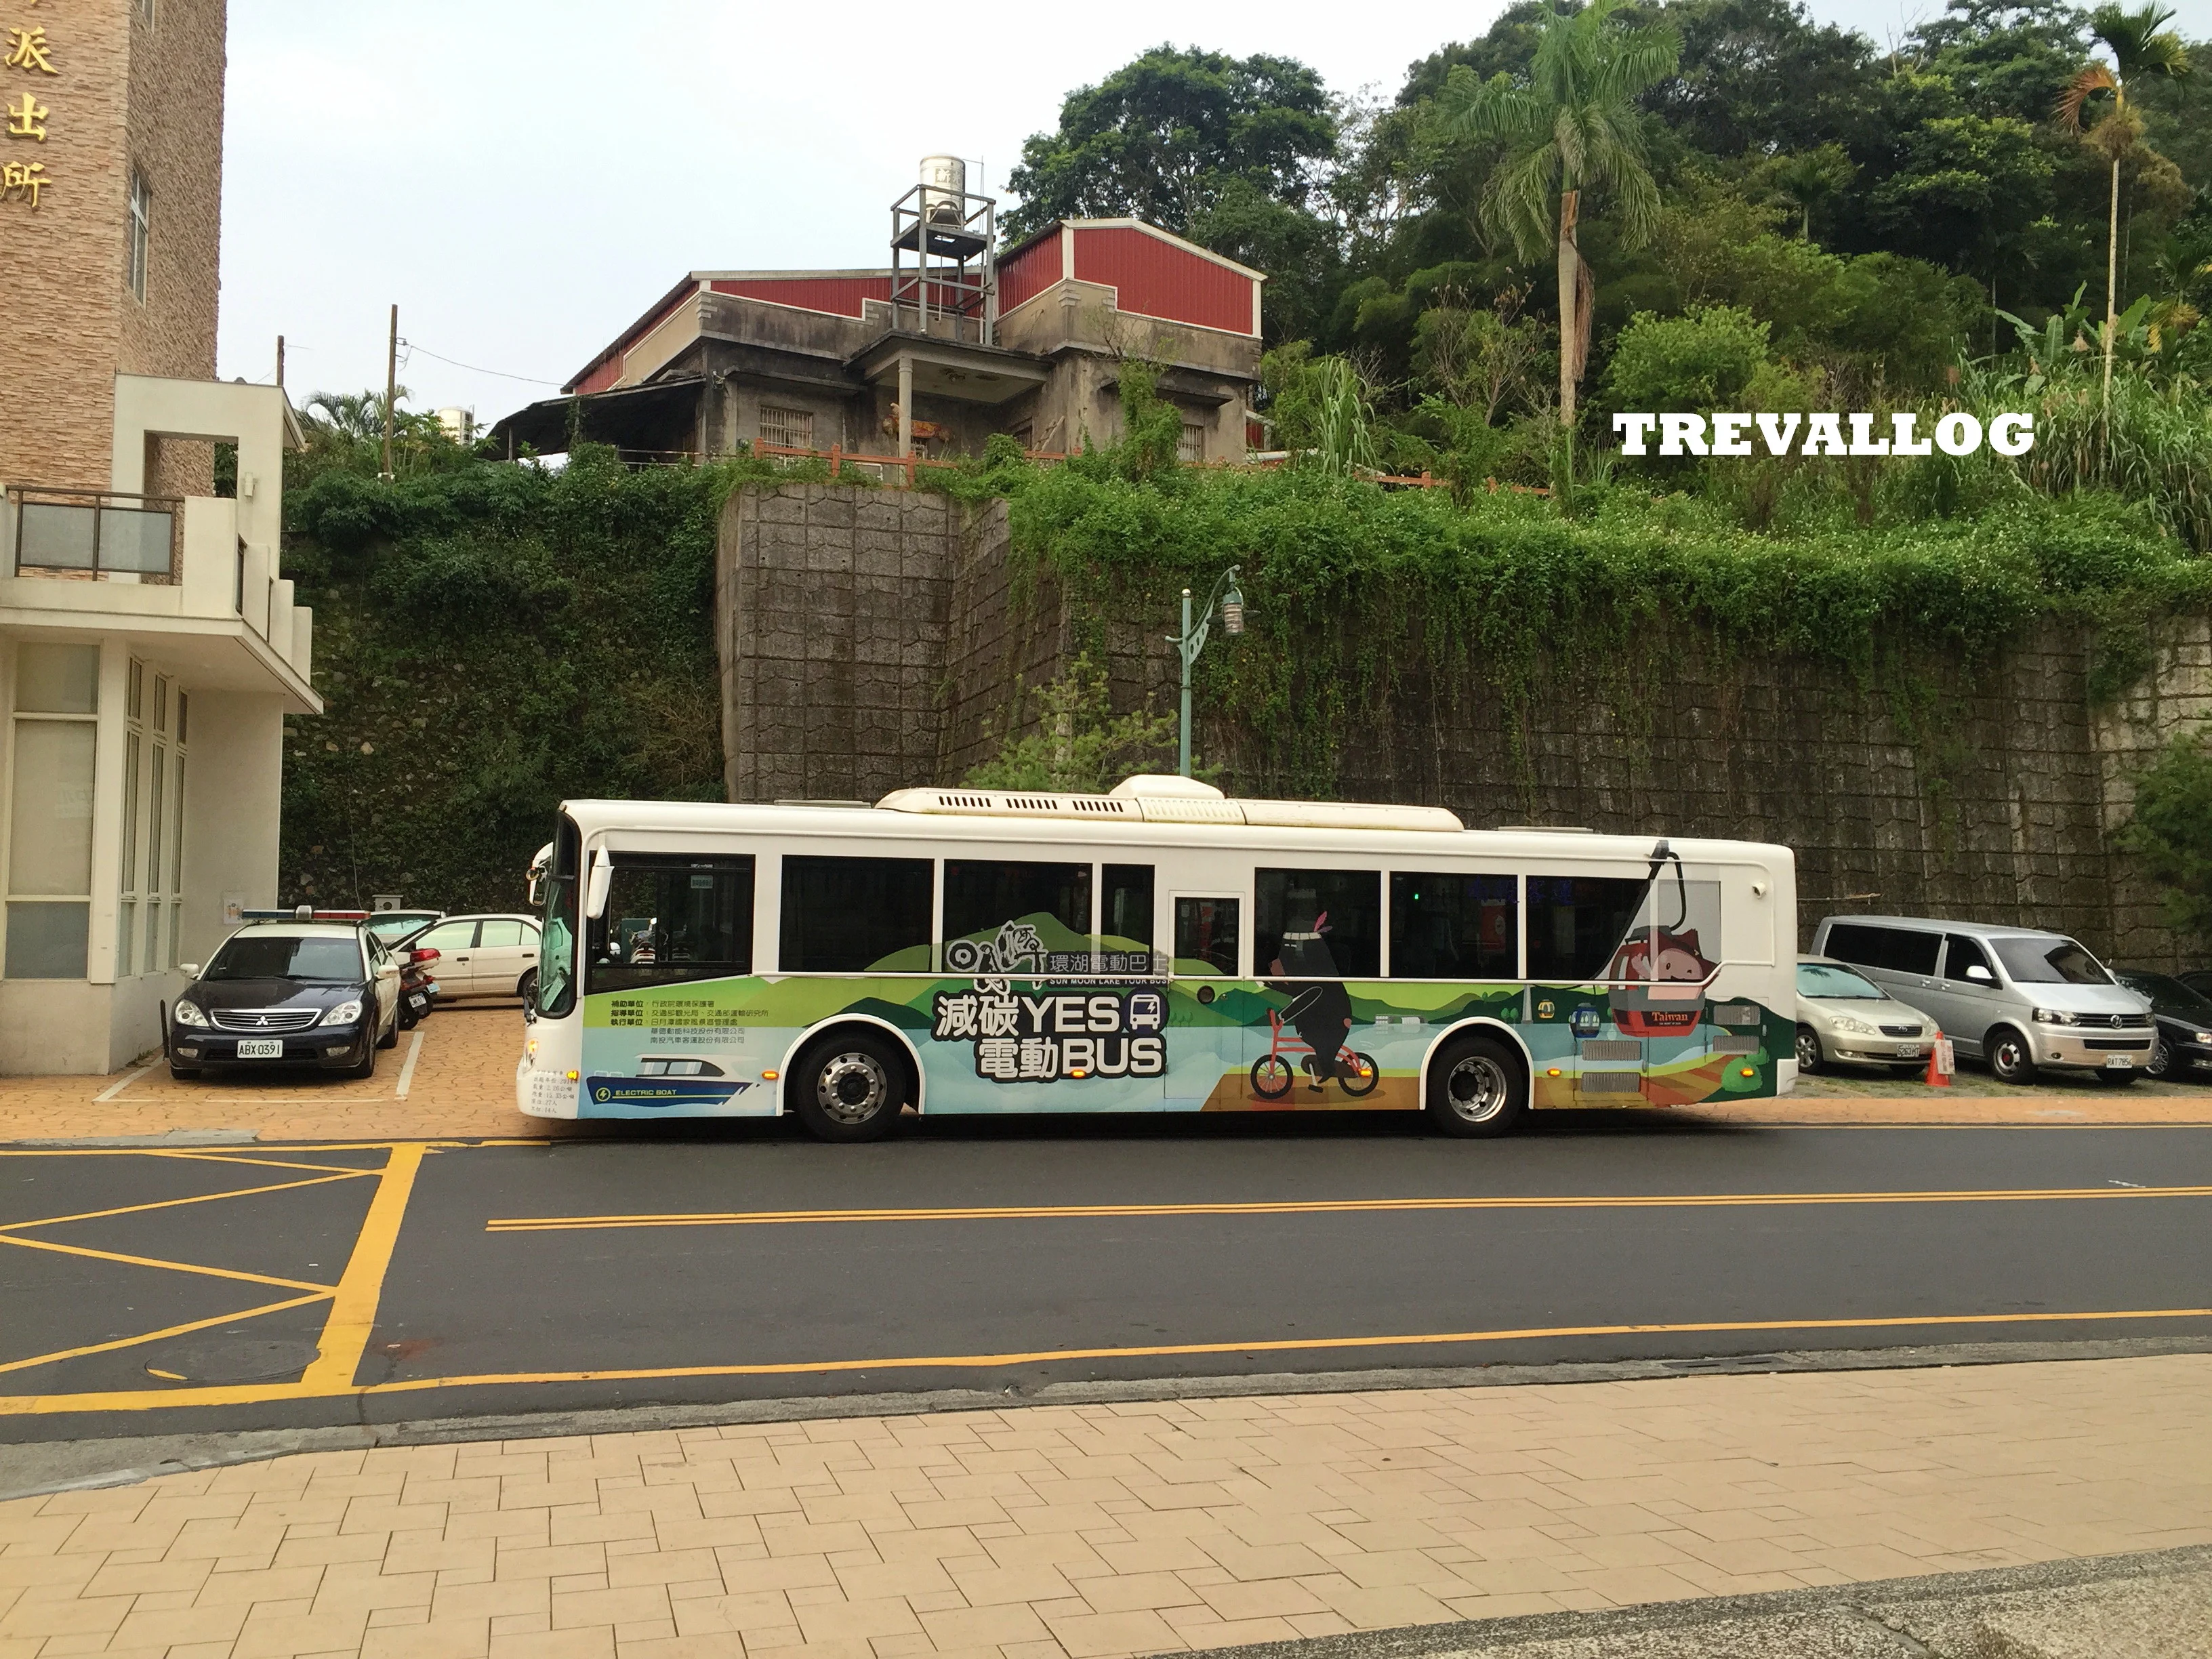 Yes Bus, round the lake bus, we took at Ita Thao, Sun Moon Lake, Taiwan